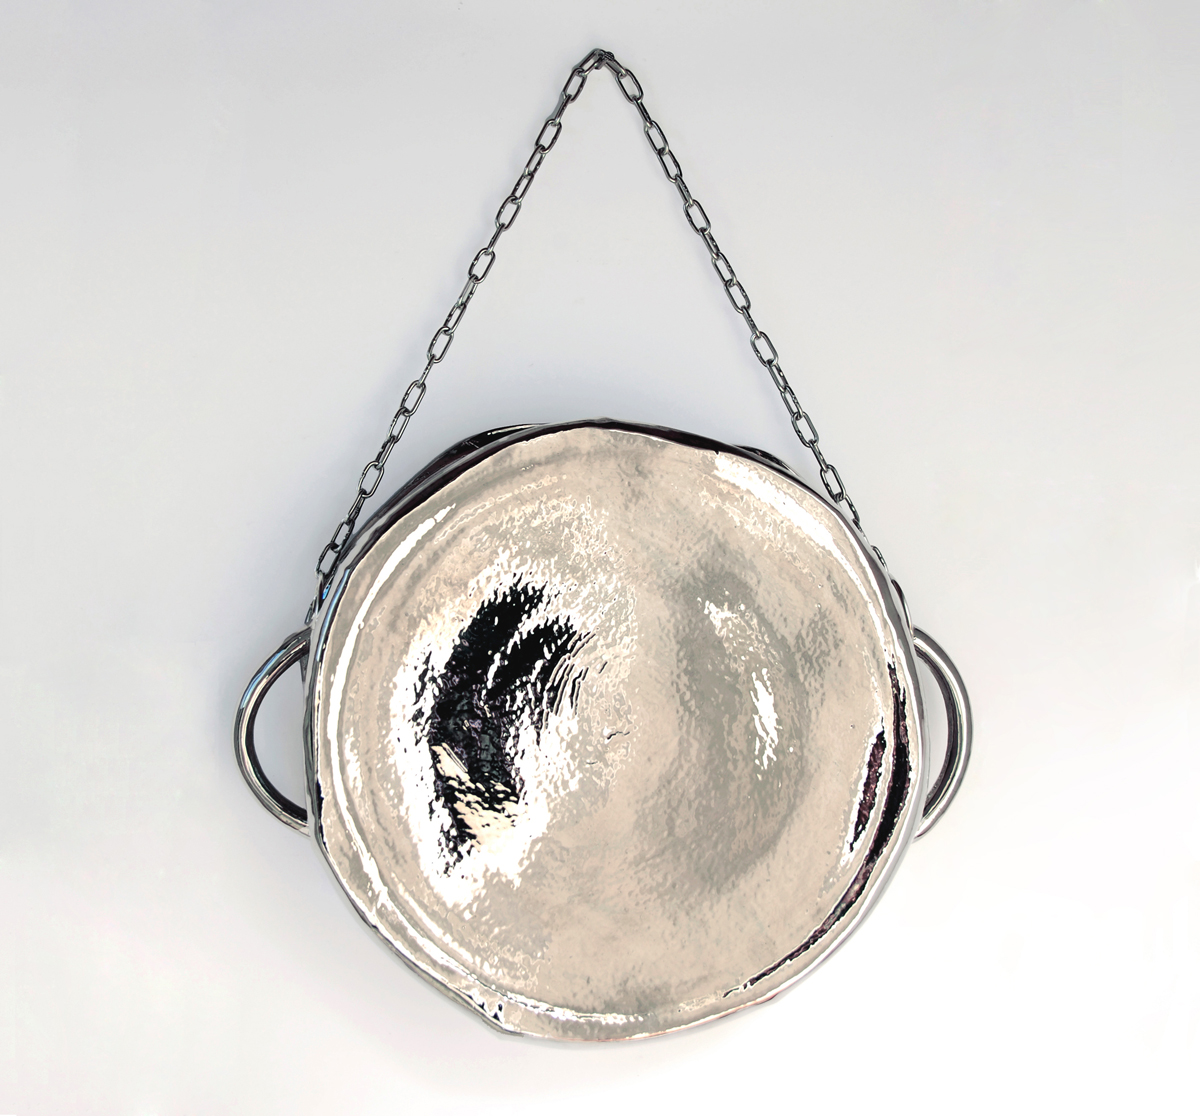 Reflective - porcelain, platinum lustre, 2017